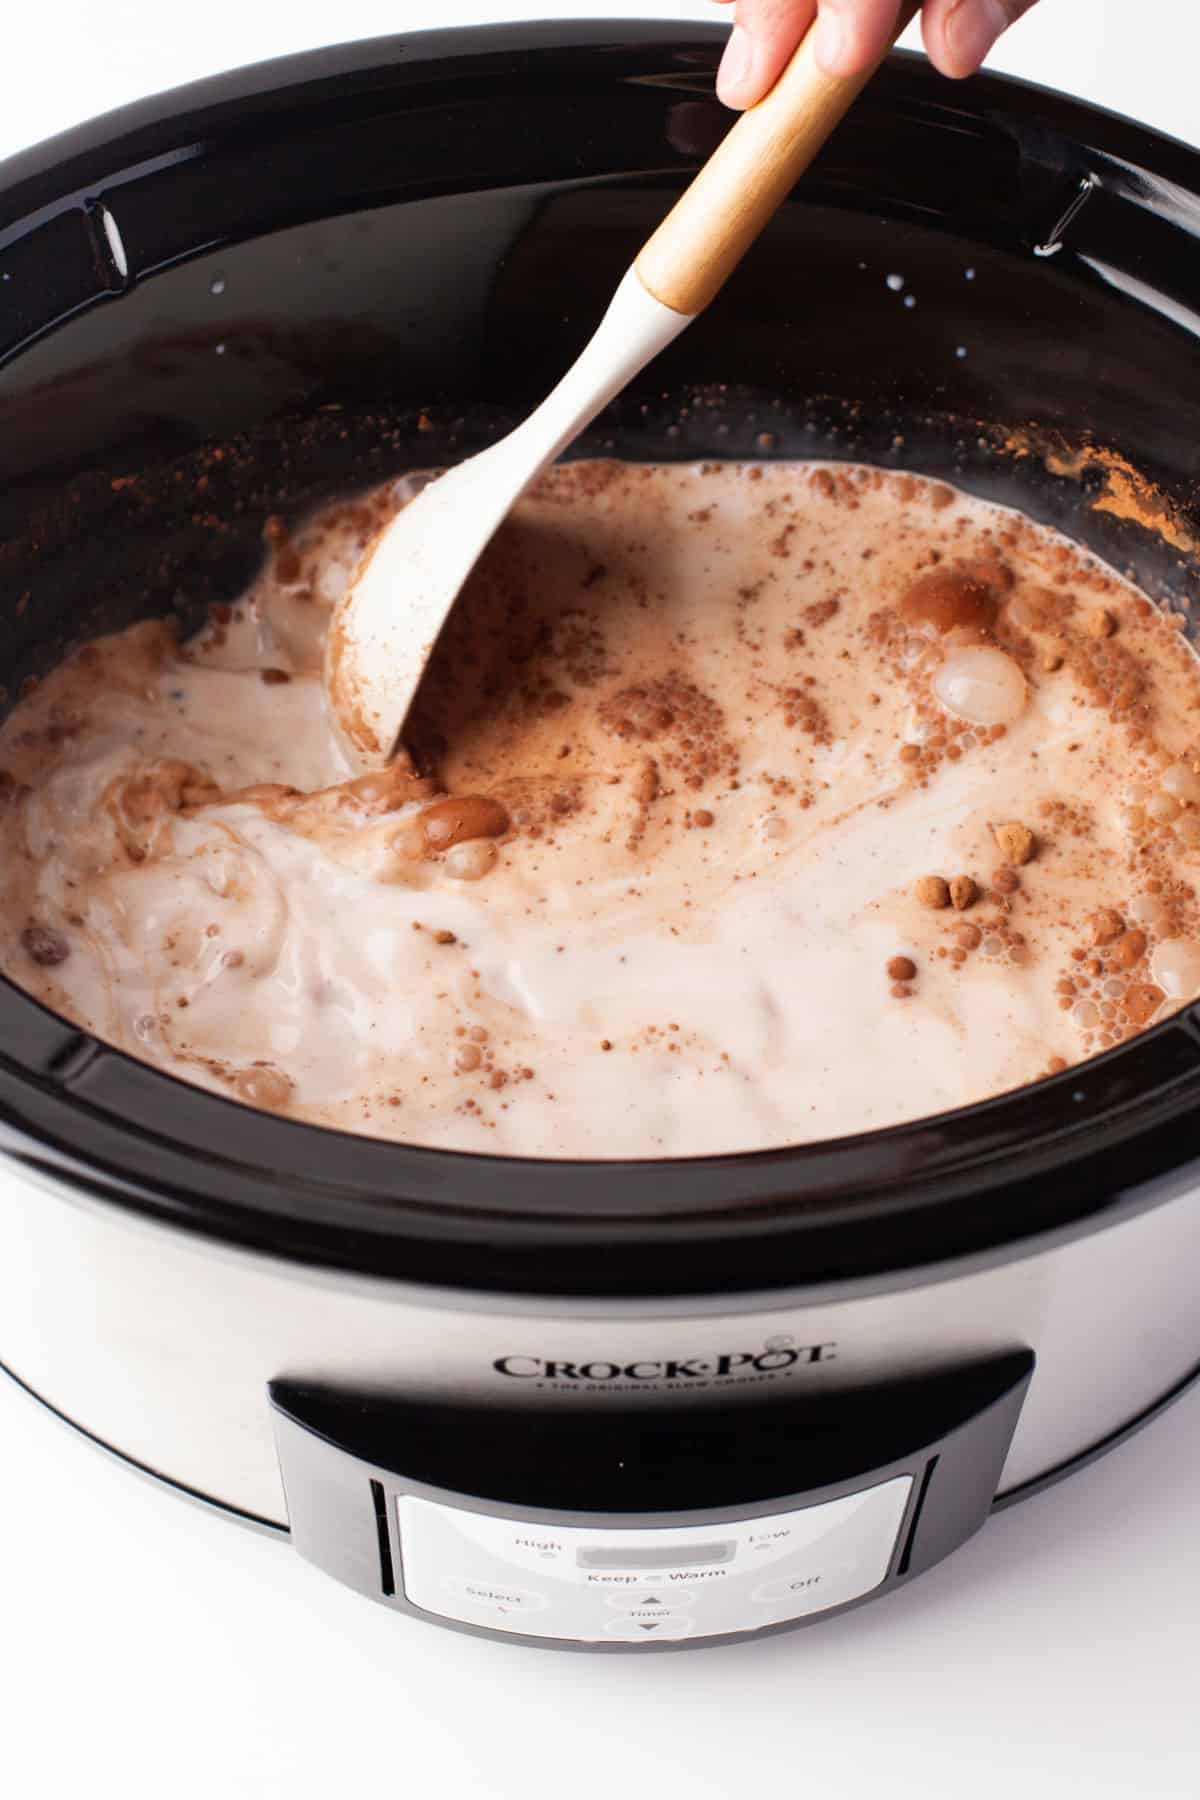 Crockpot Hot Cocoa  The Best Crock Pot Hot Chocolate Recipe